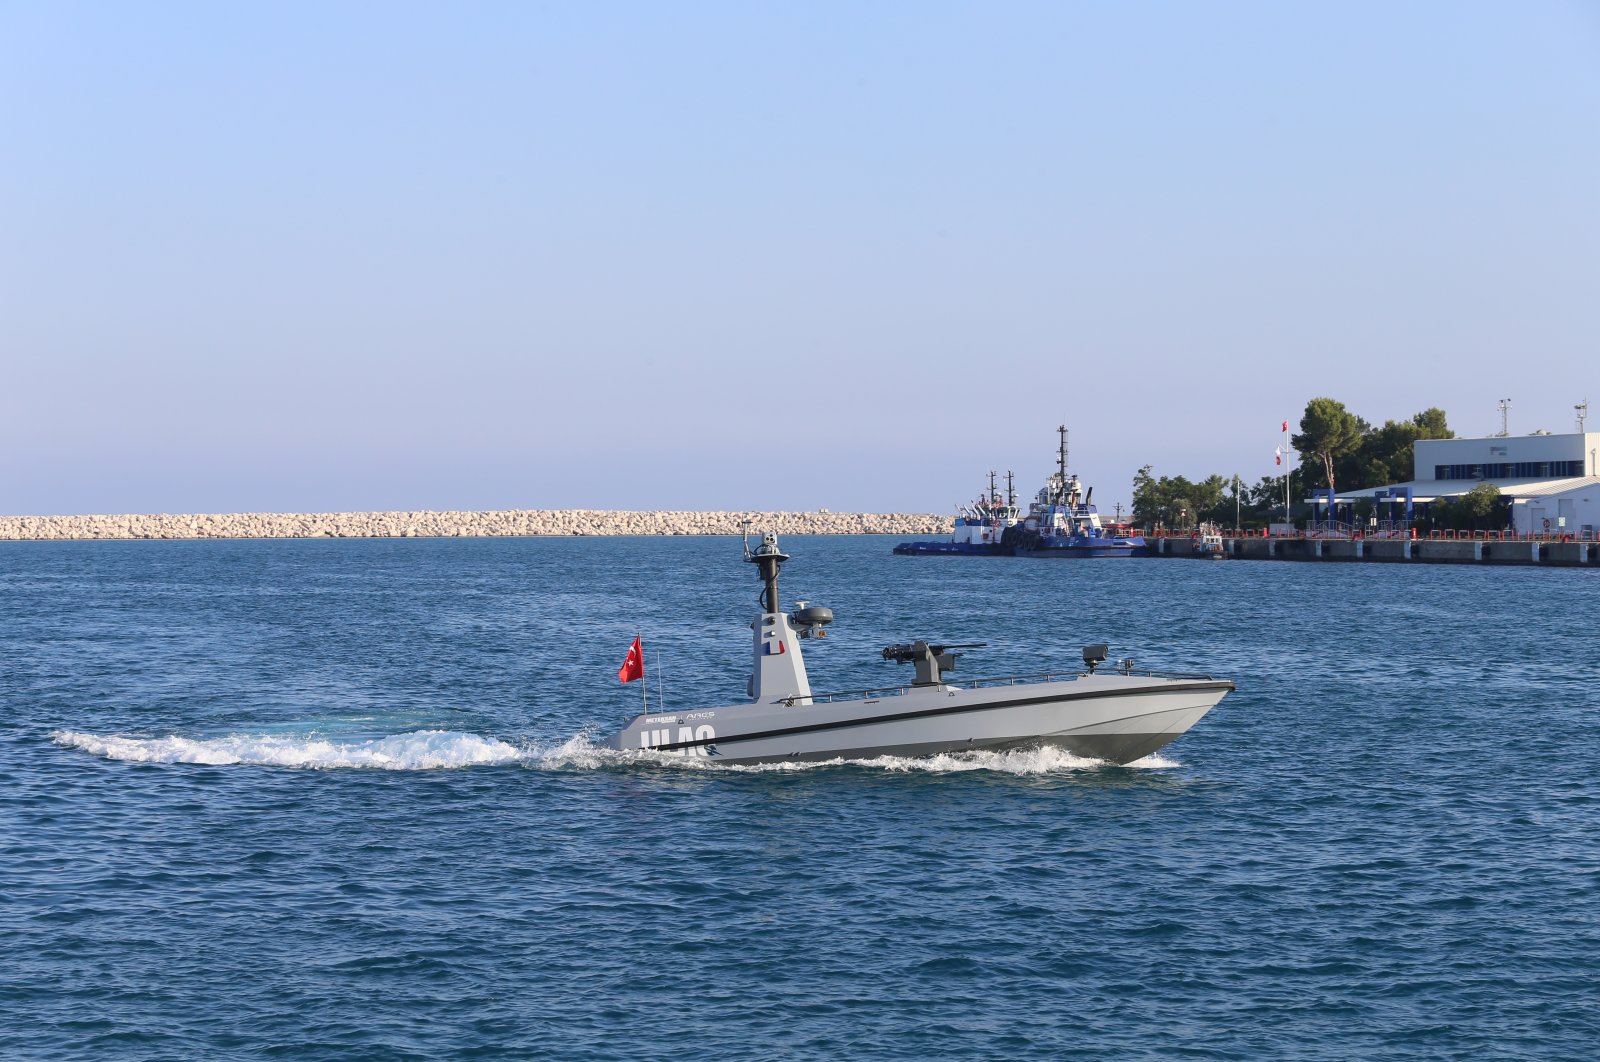 Türkiye’s first armored unmanned surface vessel (AUSV) is seen in Antalya, southern Türkiye, July 31, 2022. (AA Photo)